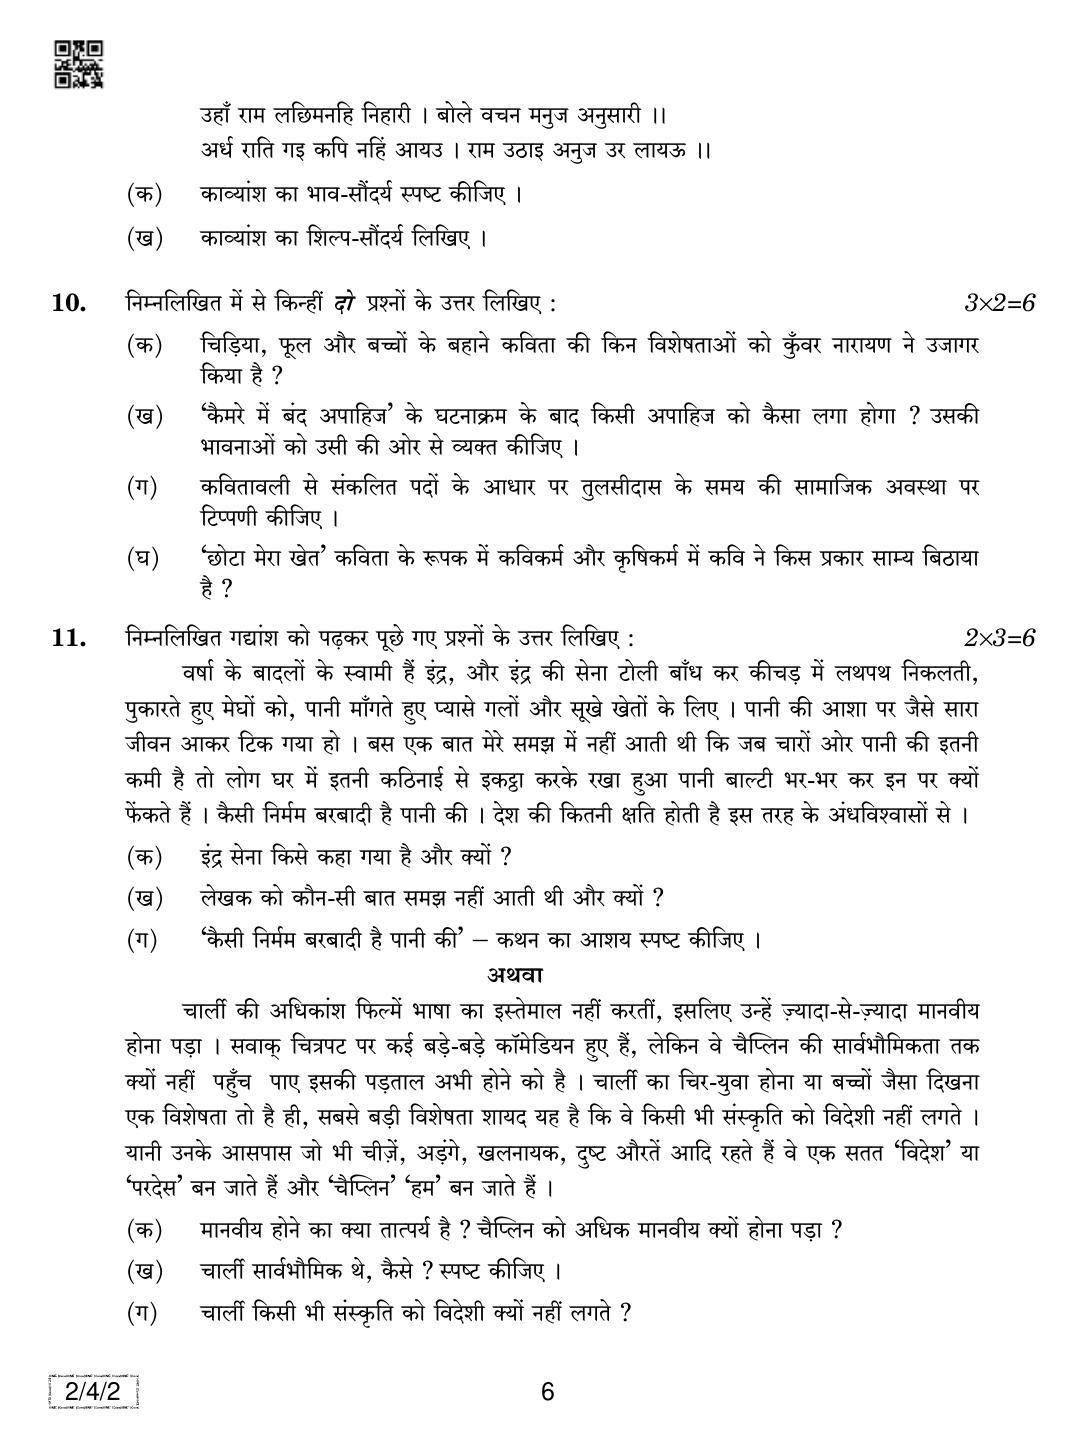 CBSE Class 12 2-4-2 Hindi Core 2019 Question Paper - Page 6